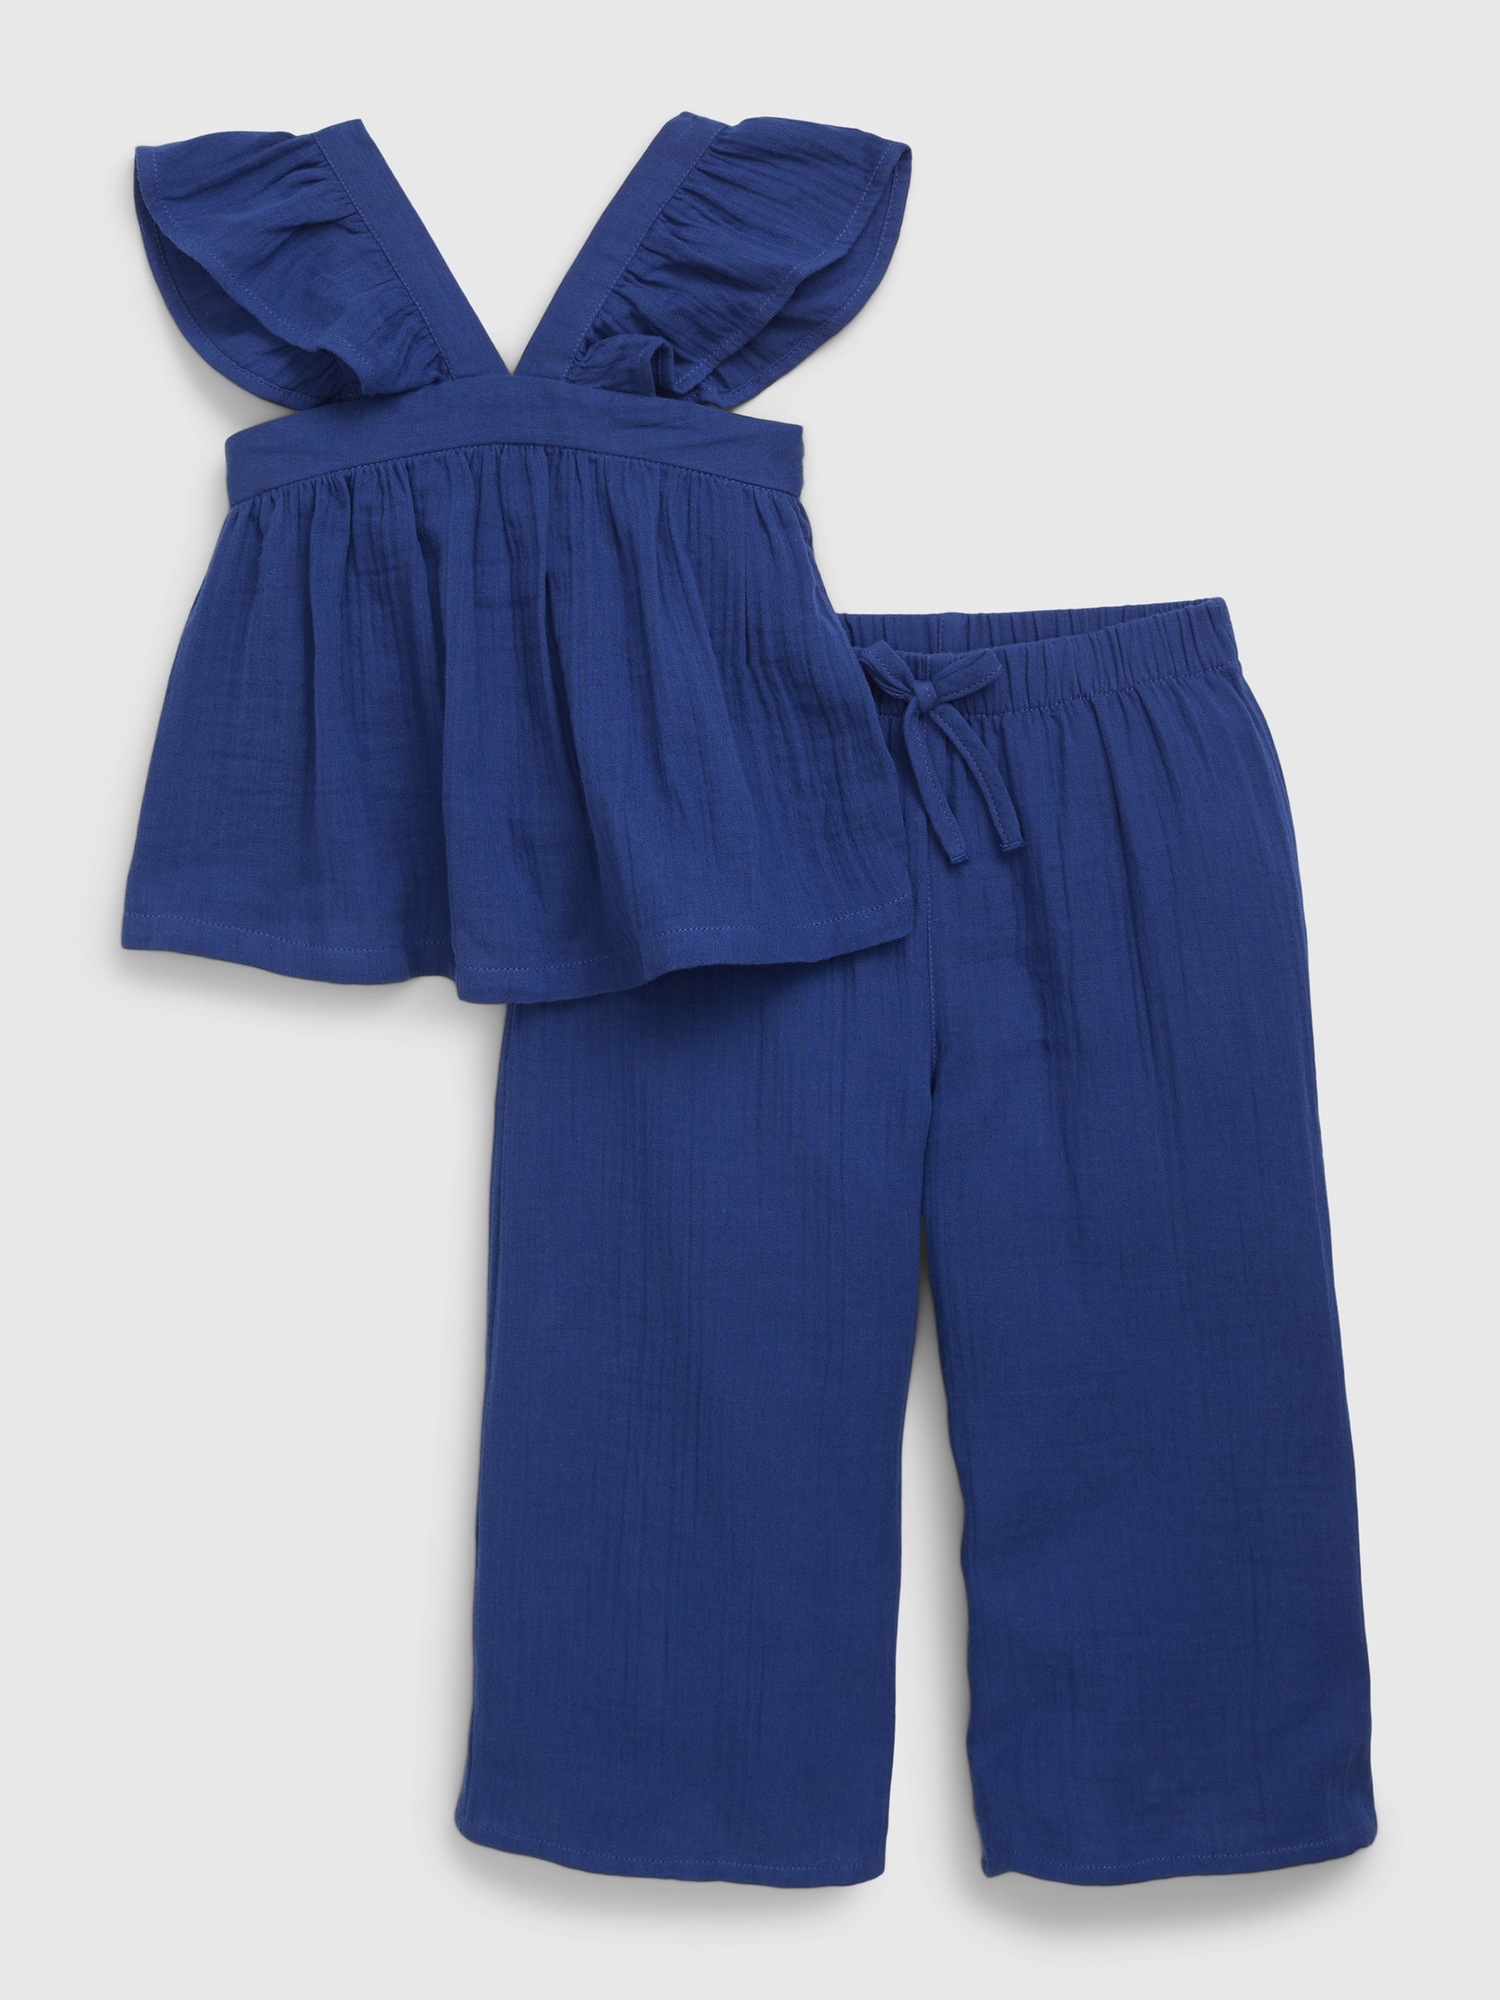 Gap Toddler Crinkle Gauze Outfit Set blue. 1